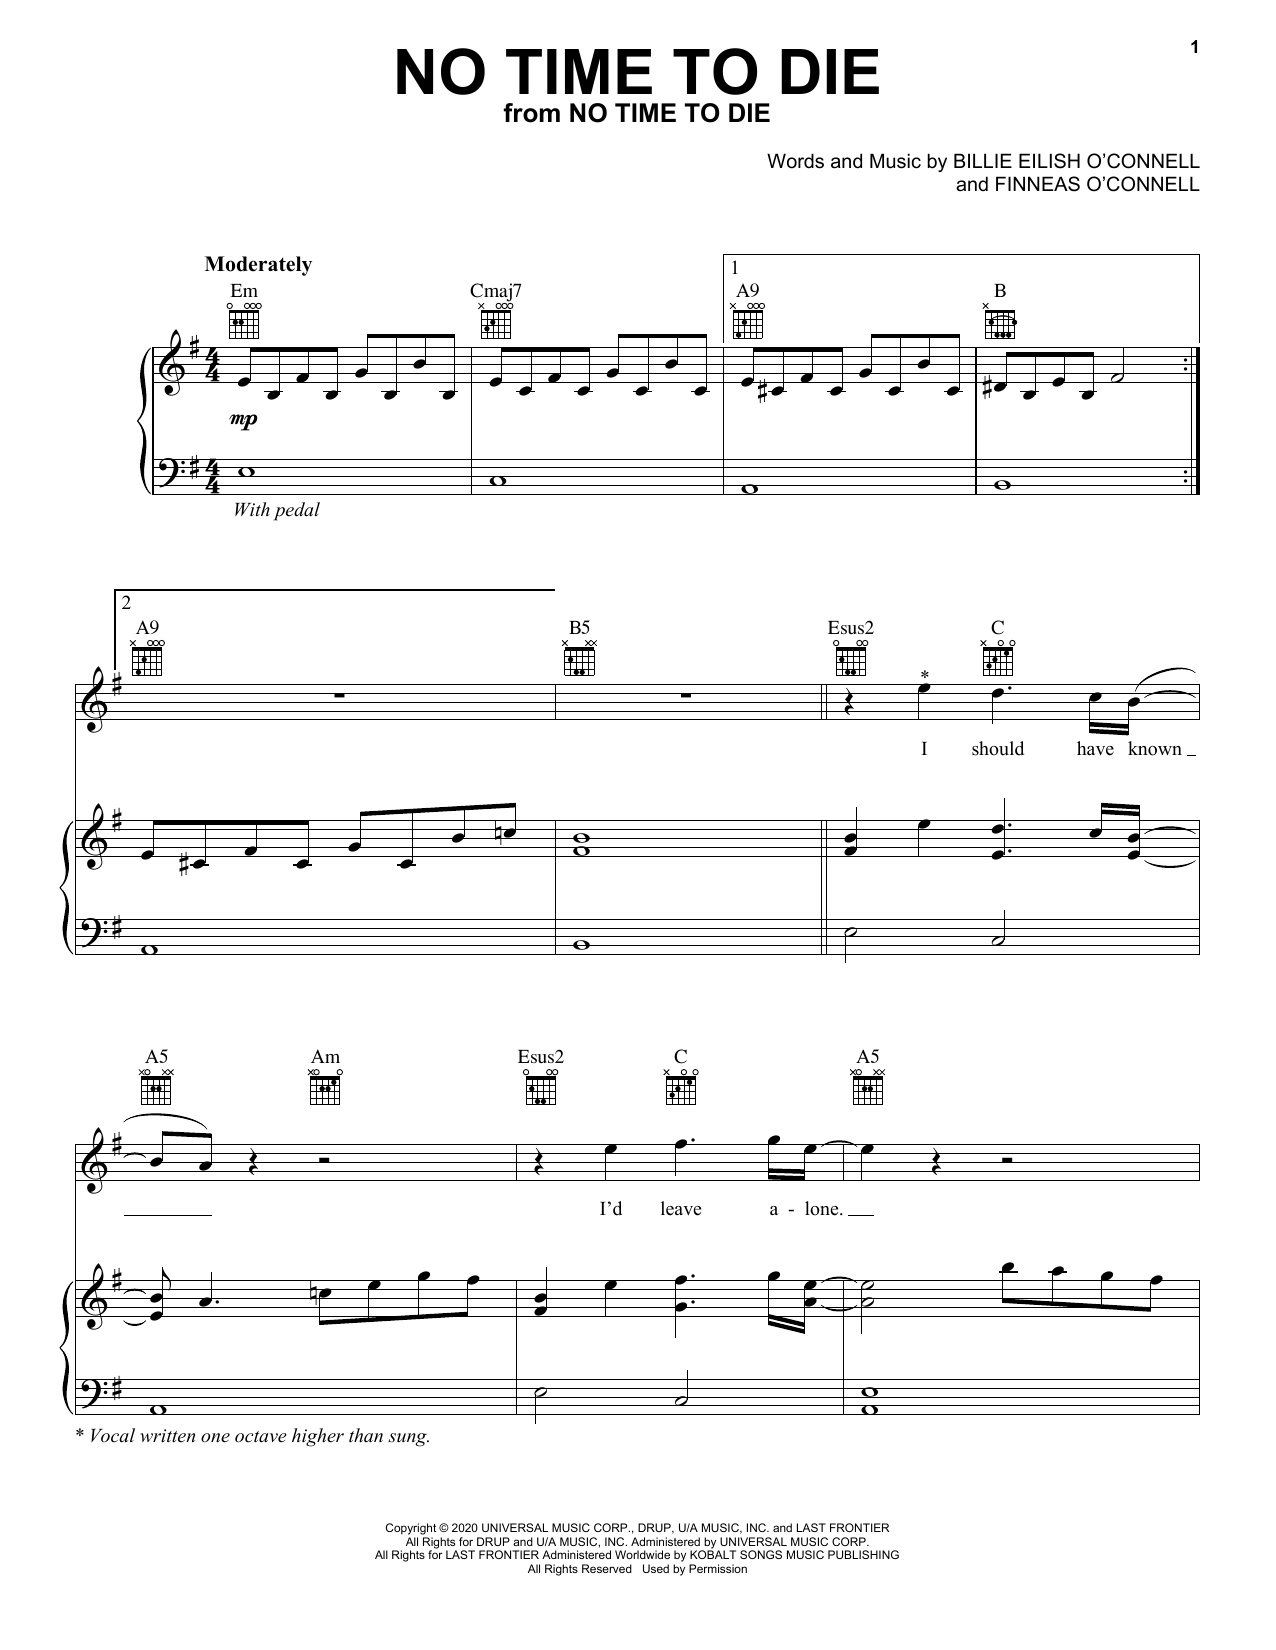 Billie Eilish No Time To Die Sheet Music Notes & Chords for Guitar Chords/Lyrics - Download or Print PDF